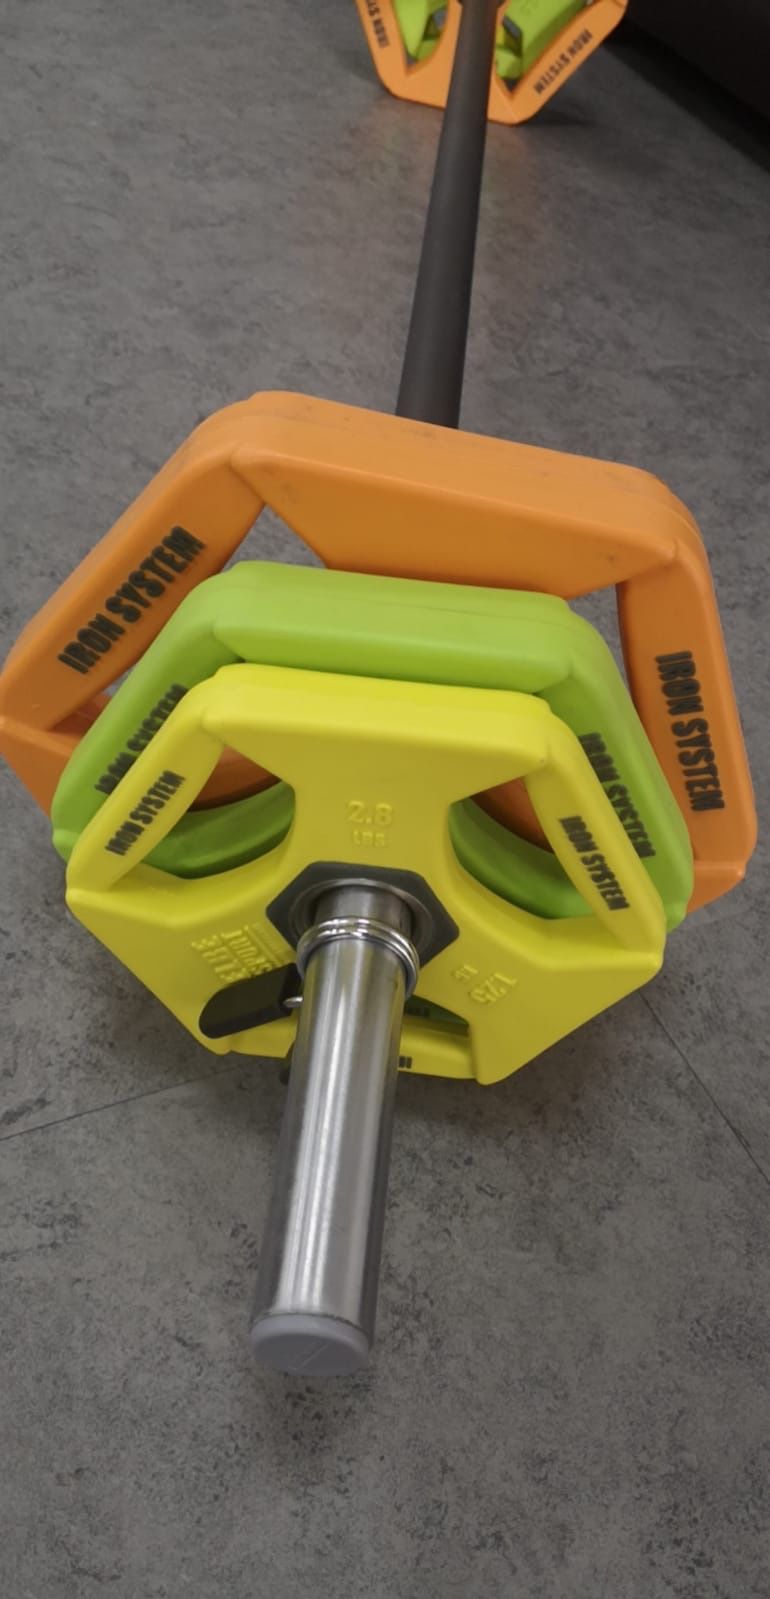 Pumping set - 40lbs plates + bar + weights clips